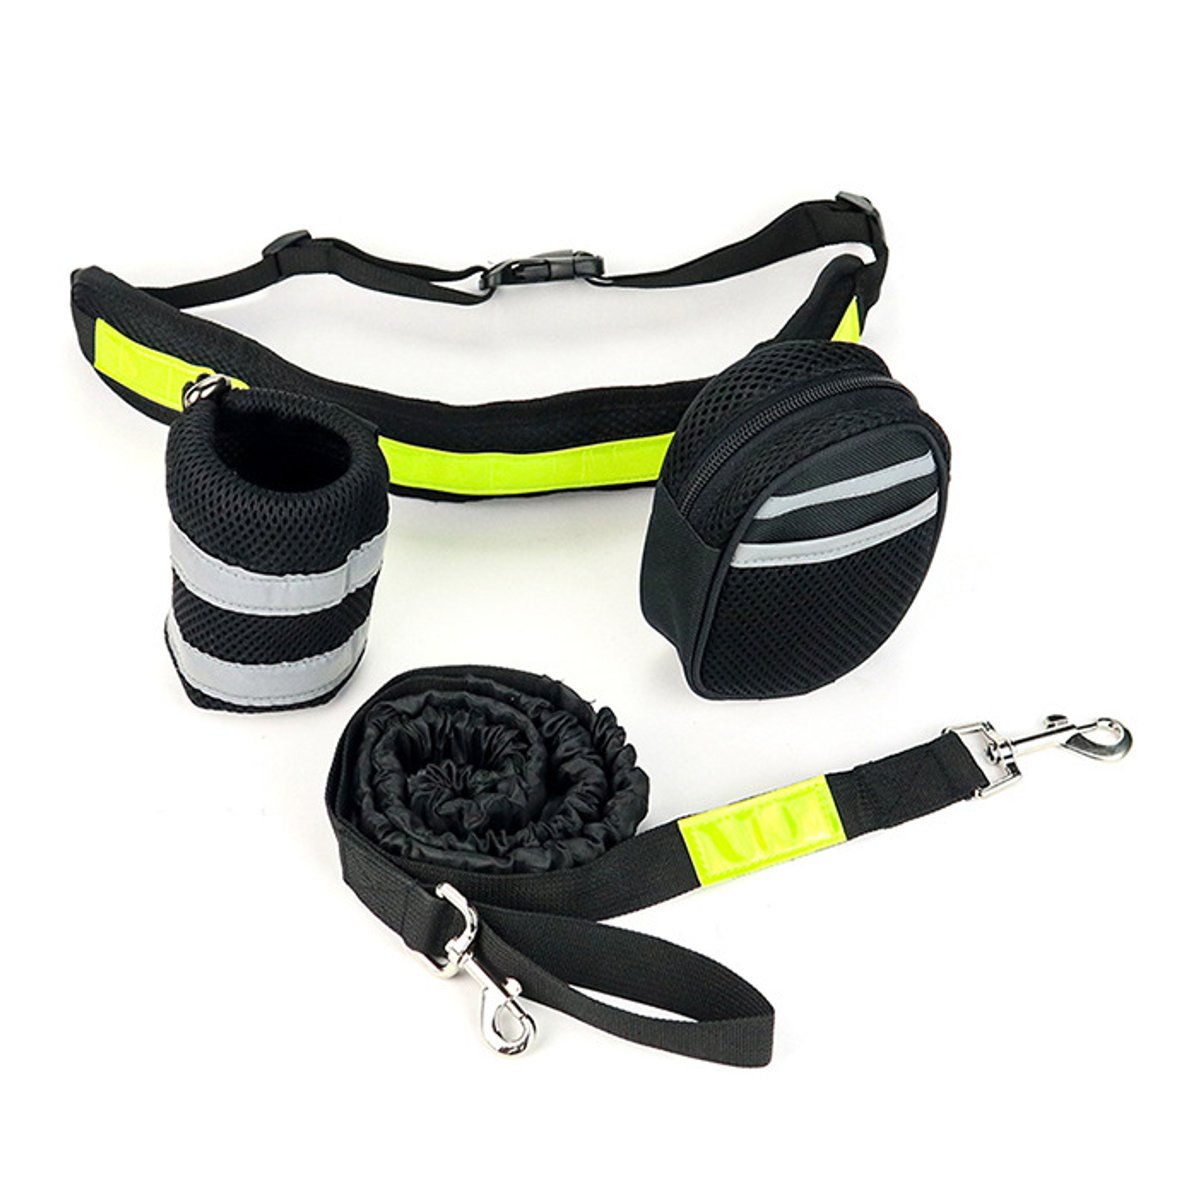 

Hands Free Pet Dog Traction Rope Outdoor Walking Running Waist Belt Bag Pouch Set